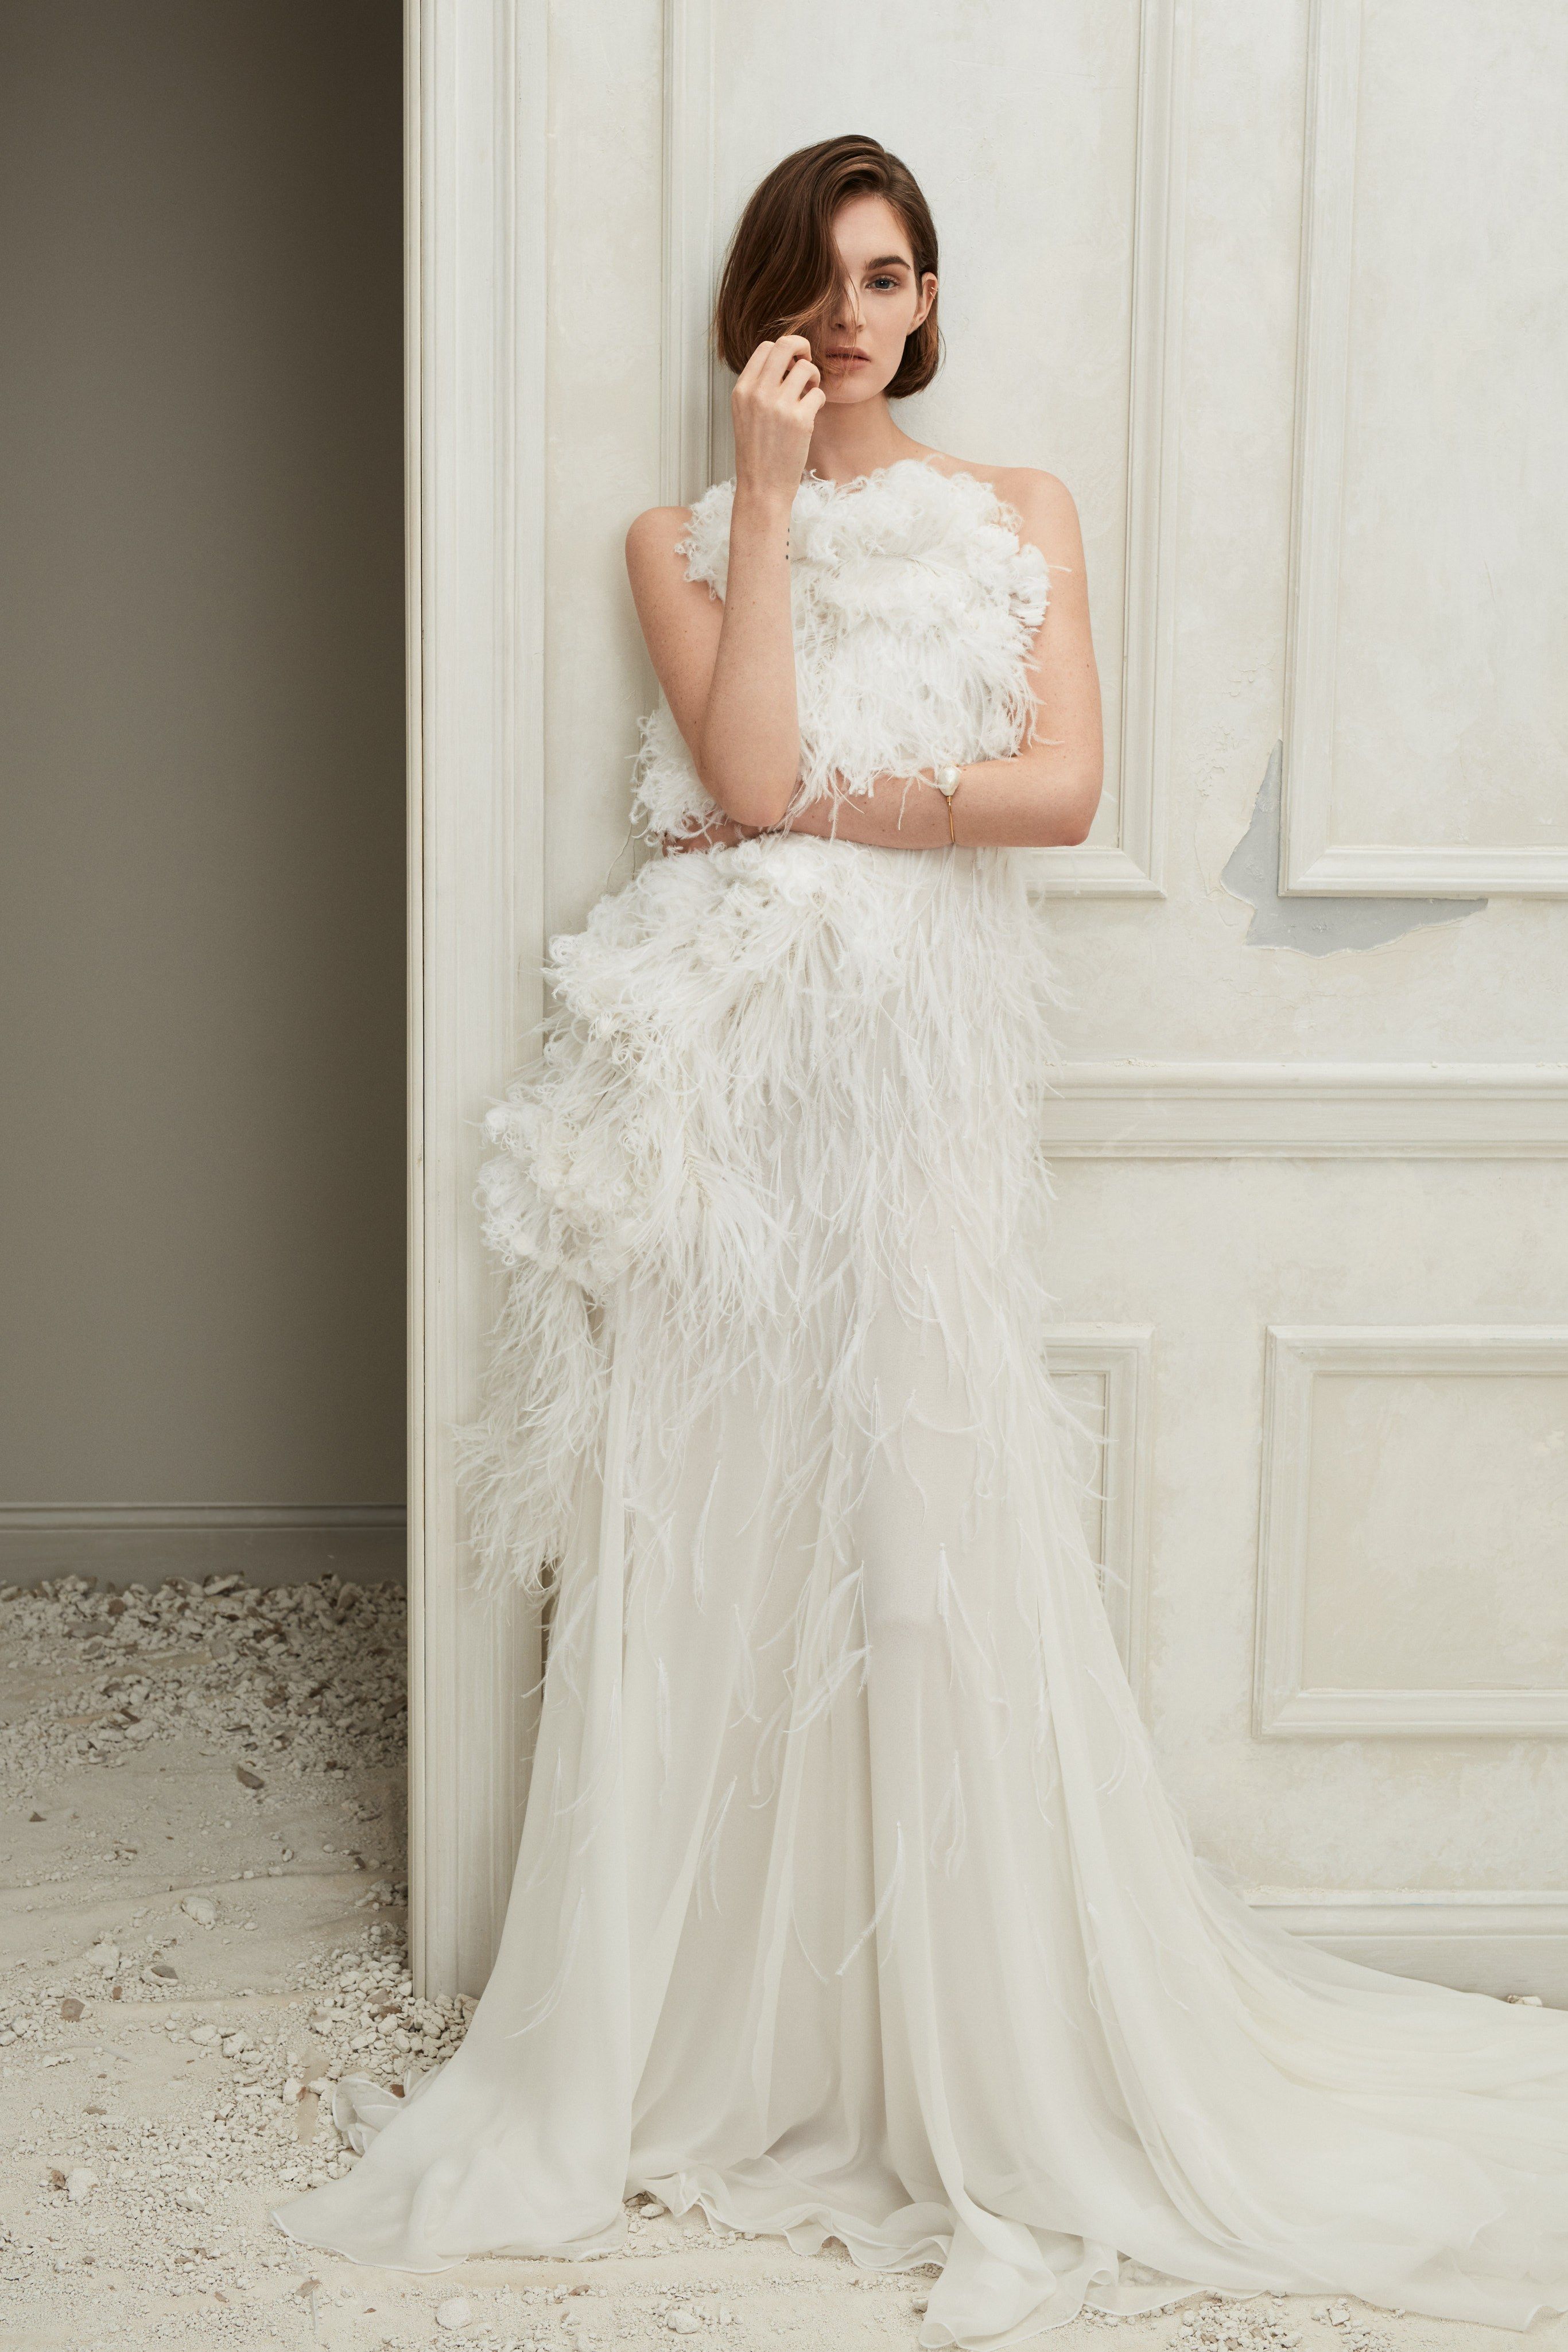 Premium Photo | Female models walk the runway in beautiful stylish white wedding  dresses during a fashion show